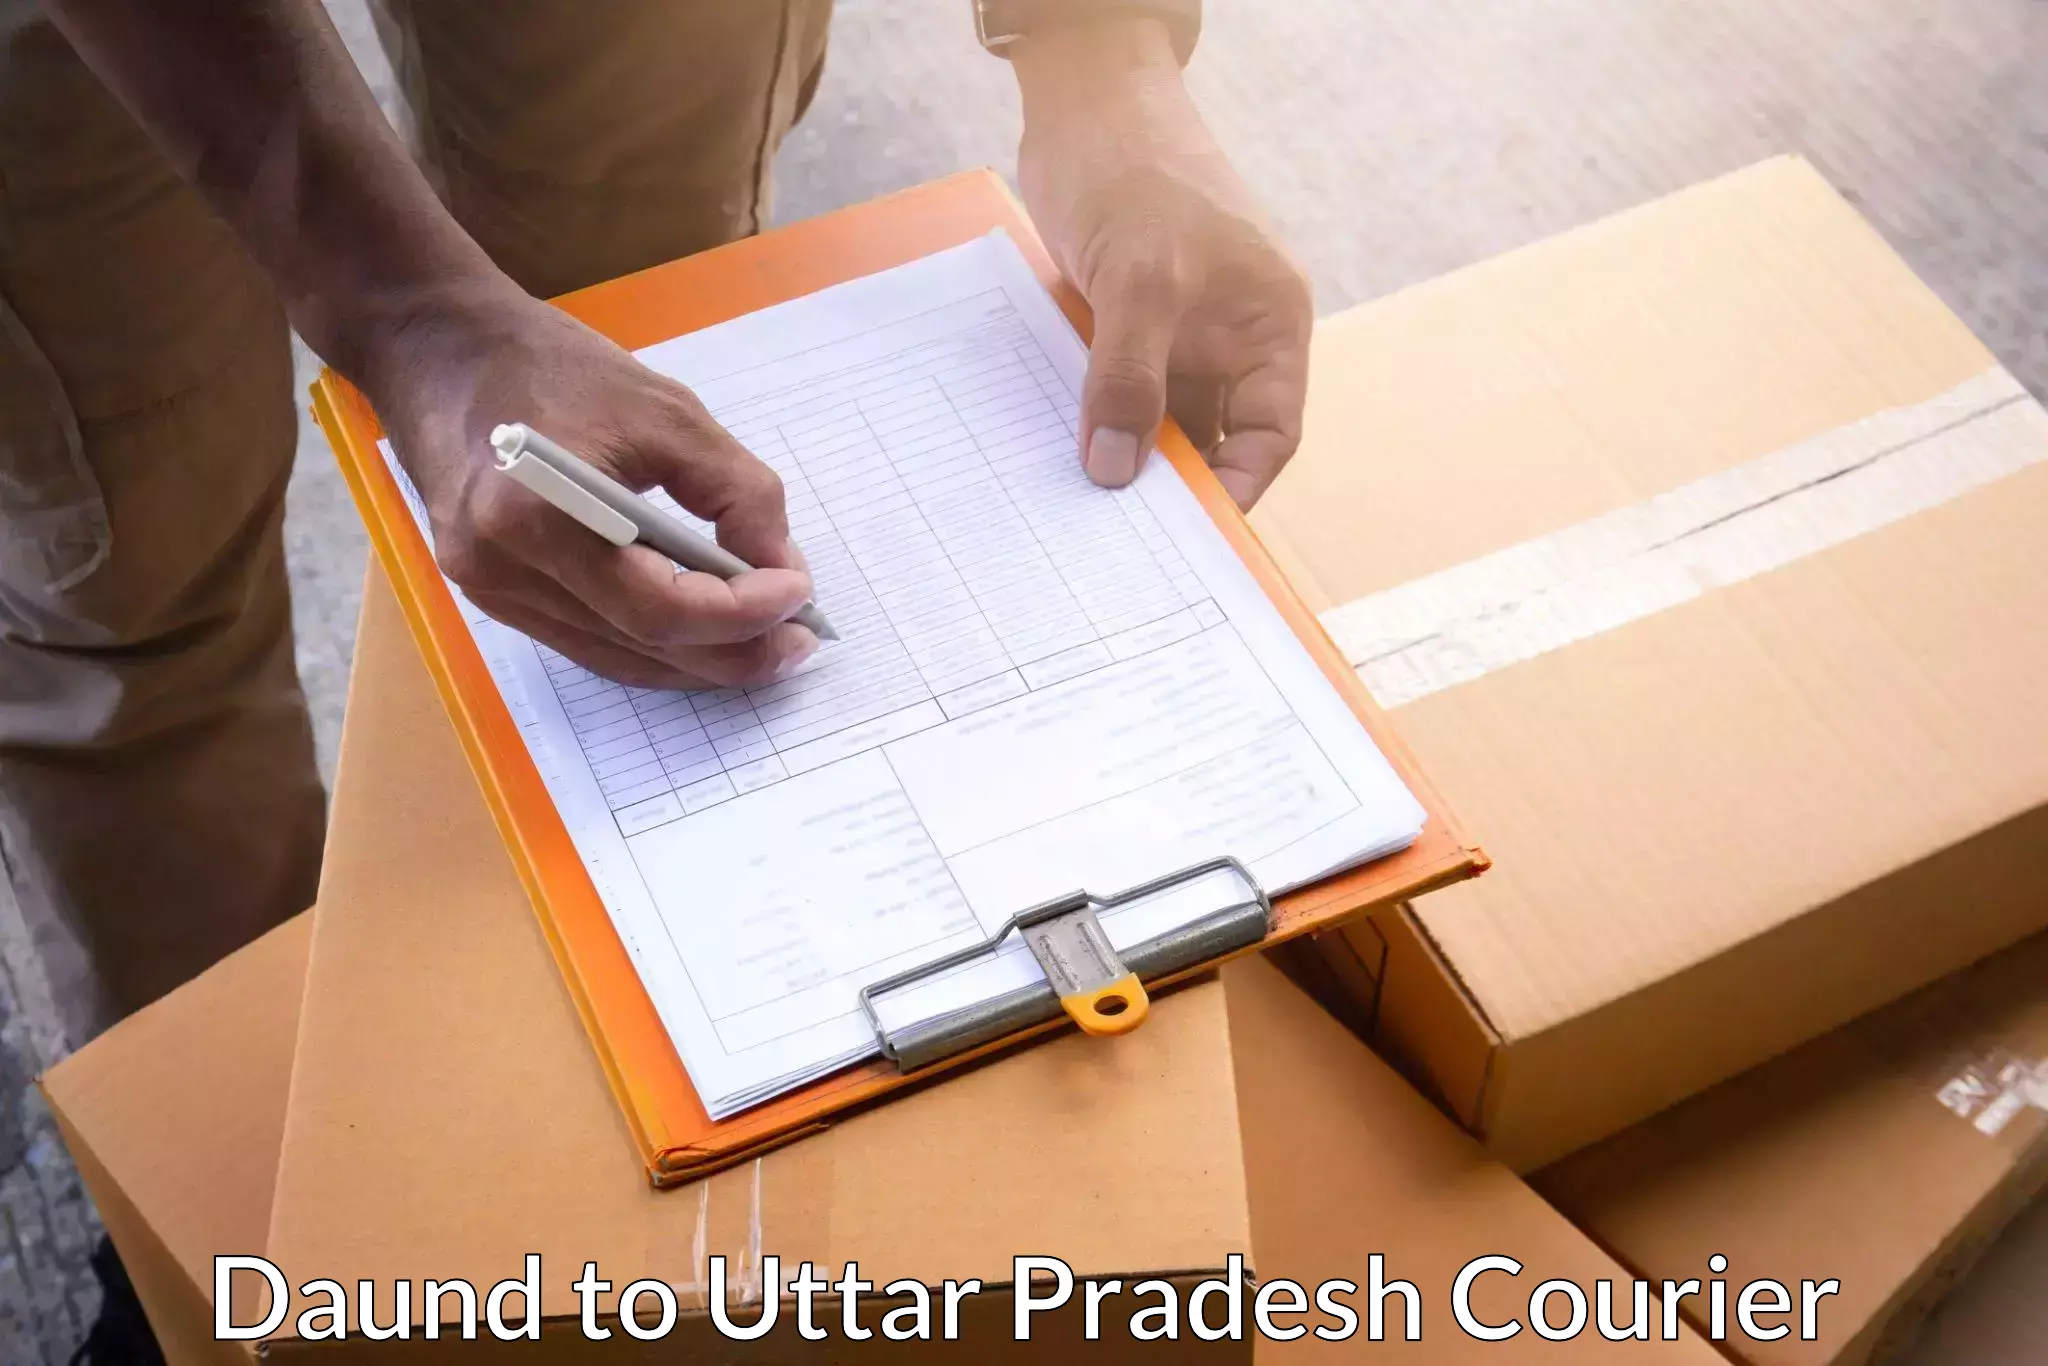 Specialized shipment handling Daund to Uttar Pradesh